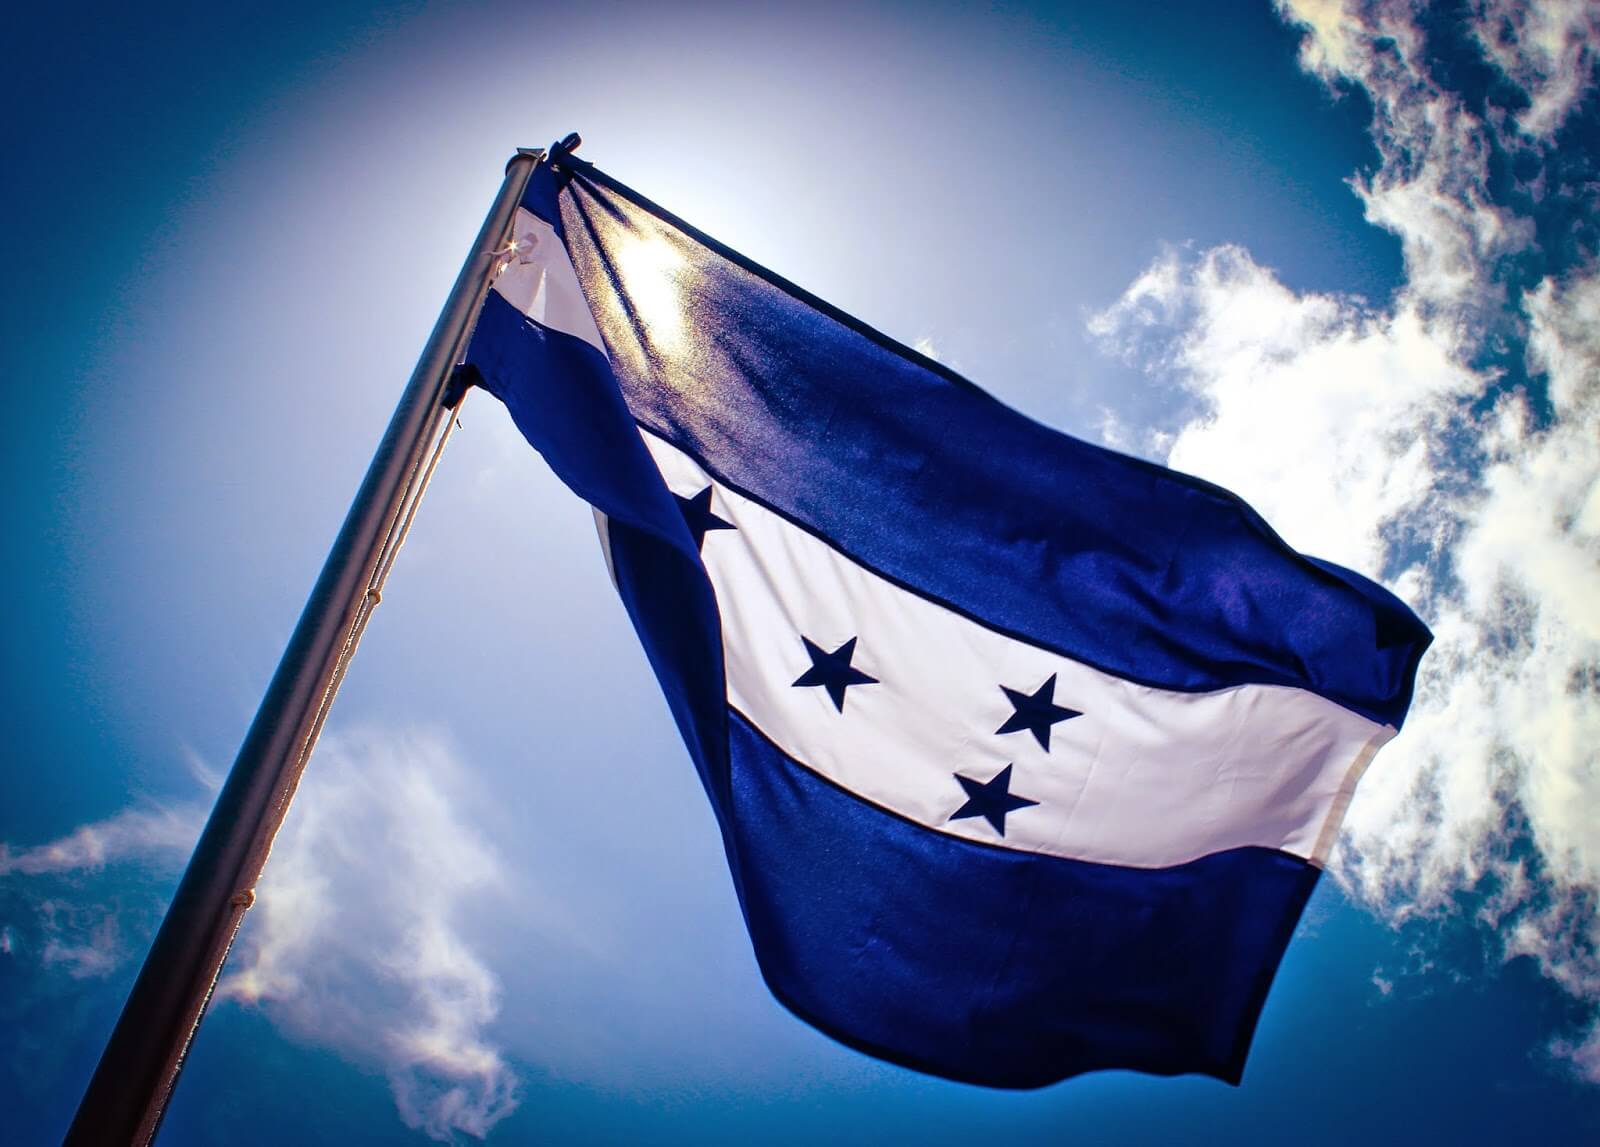 Bandera Nacional de la Republica de Honduras